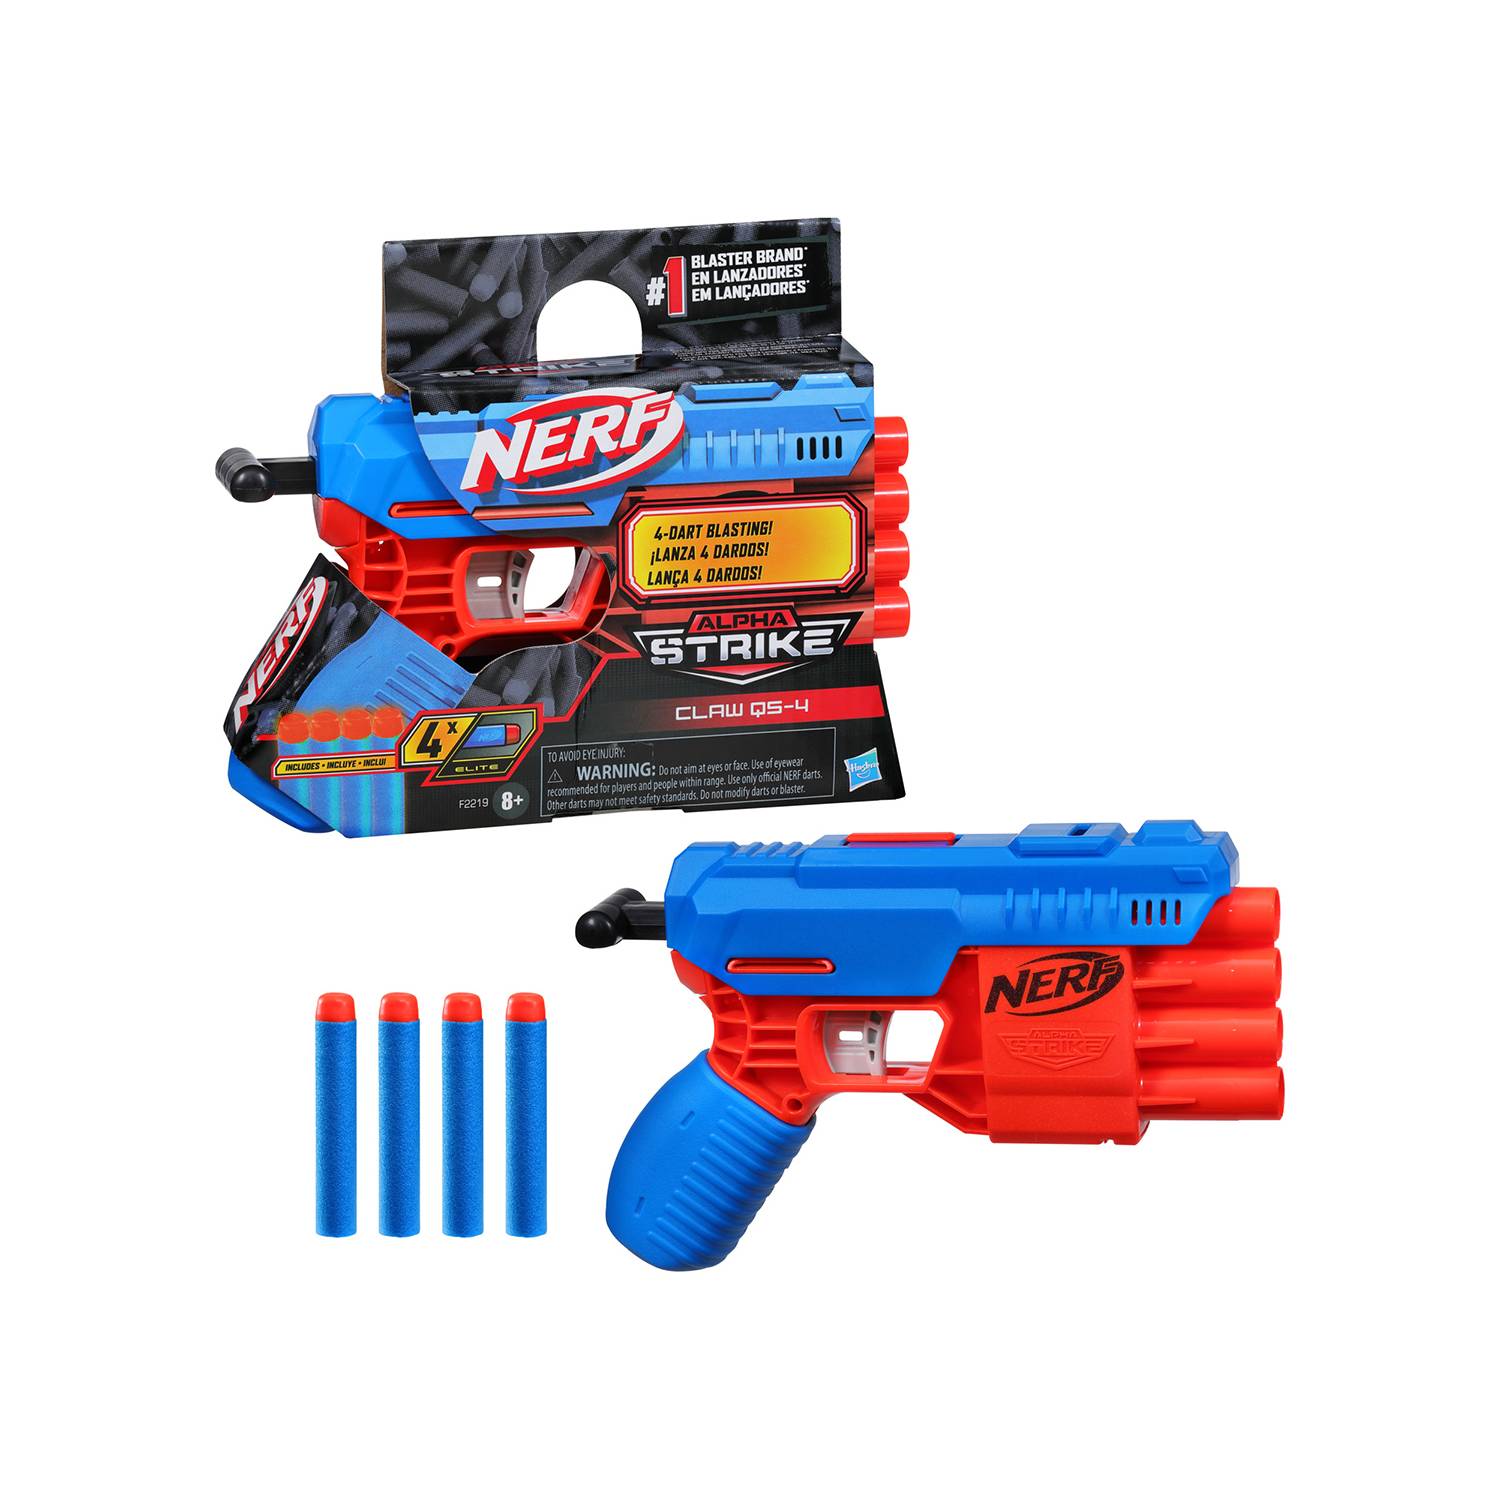 NERF Pistola Nerf Strike Claw QS-4 | falabella.com